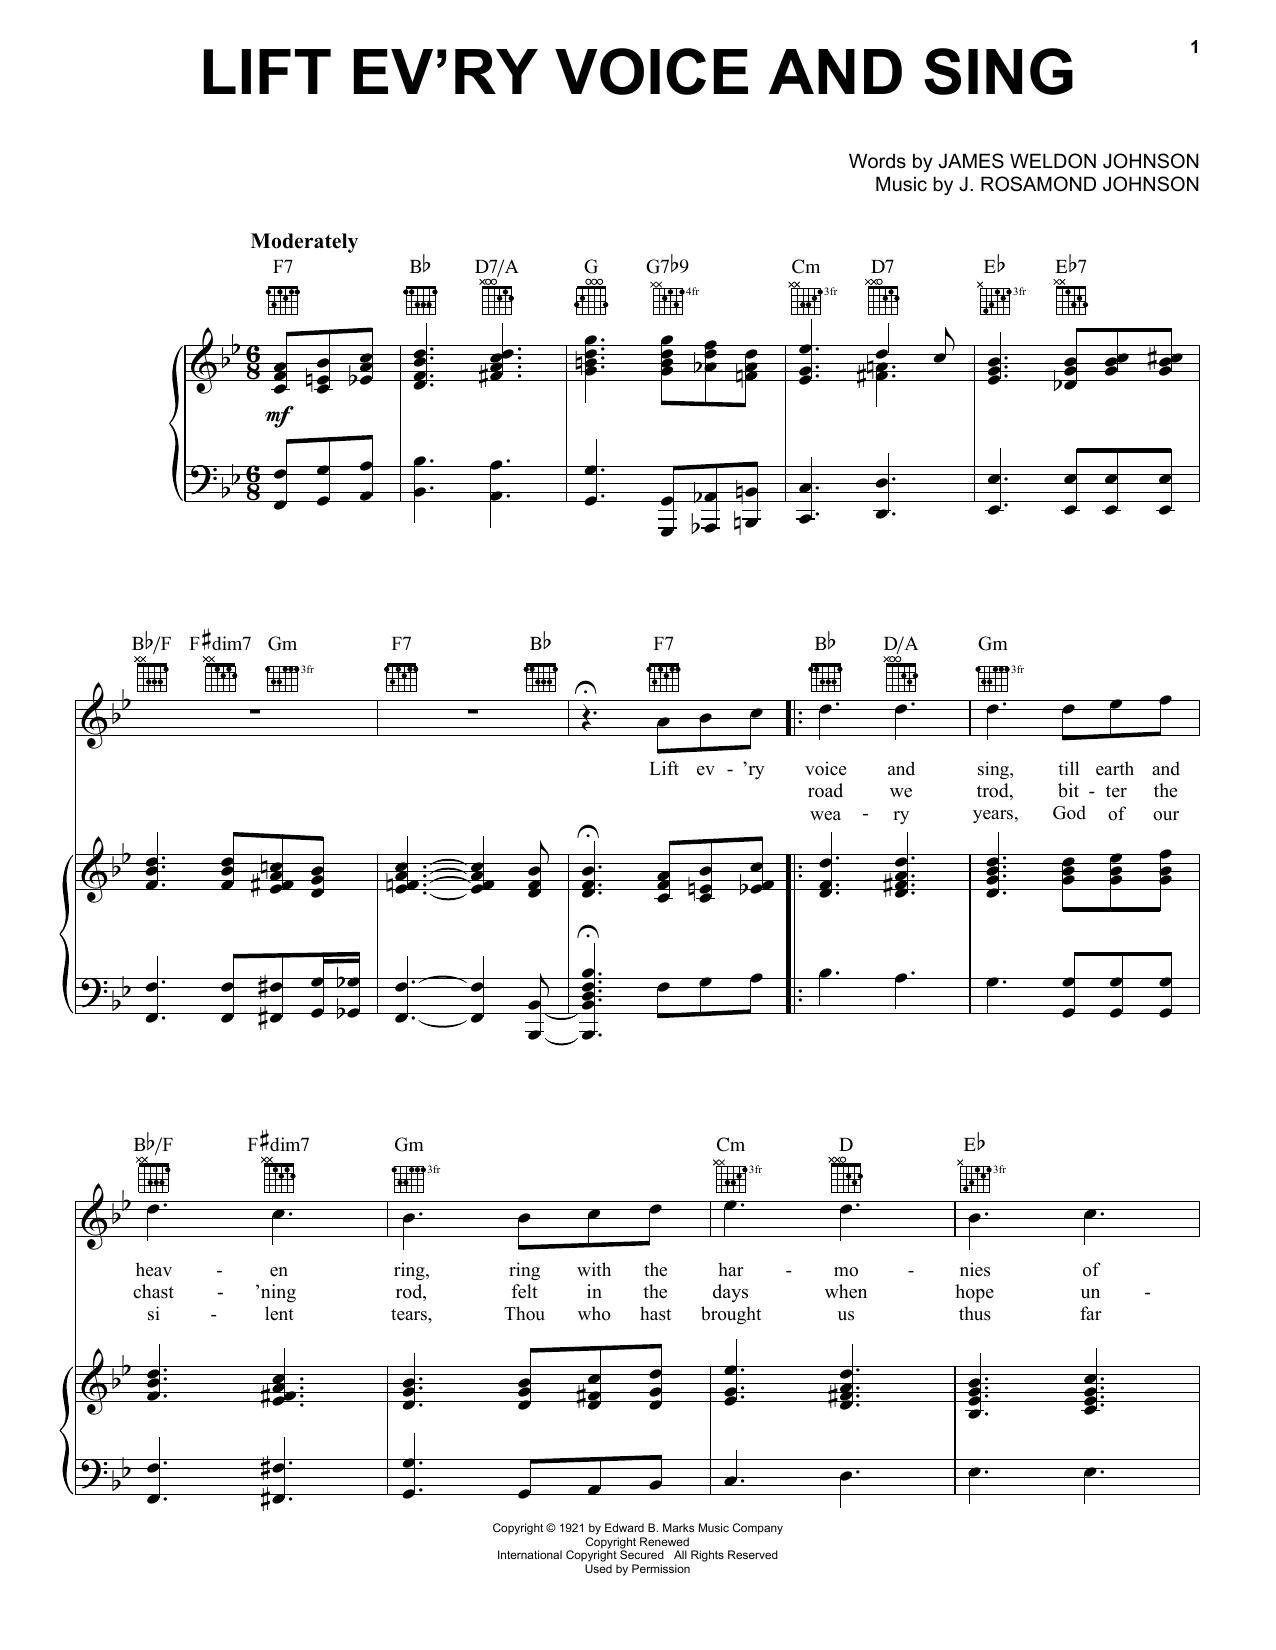 J. Rosamond Johnson Lift Ev'ry Voice And Sing sheet music notes printable PDF score